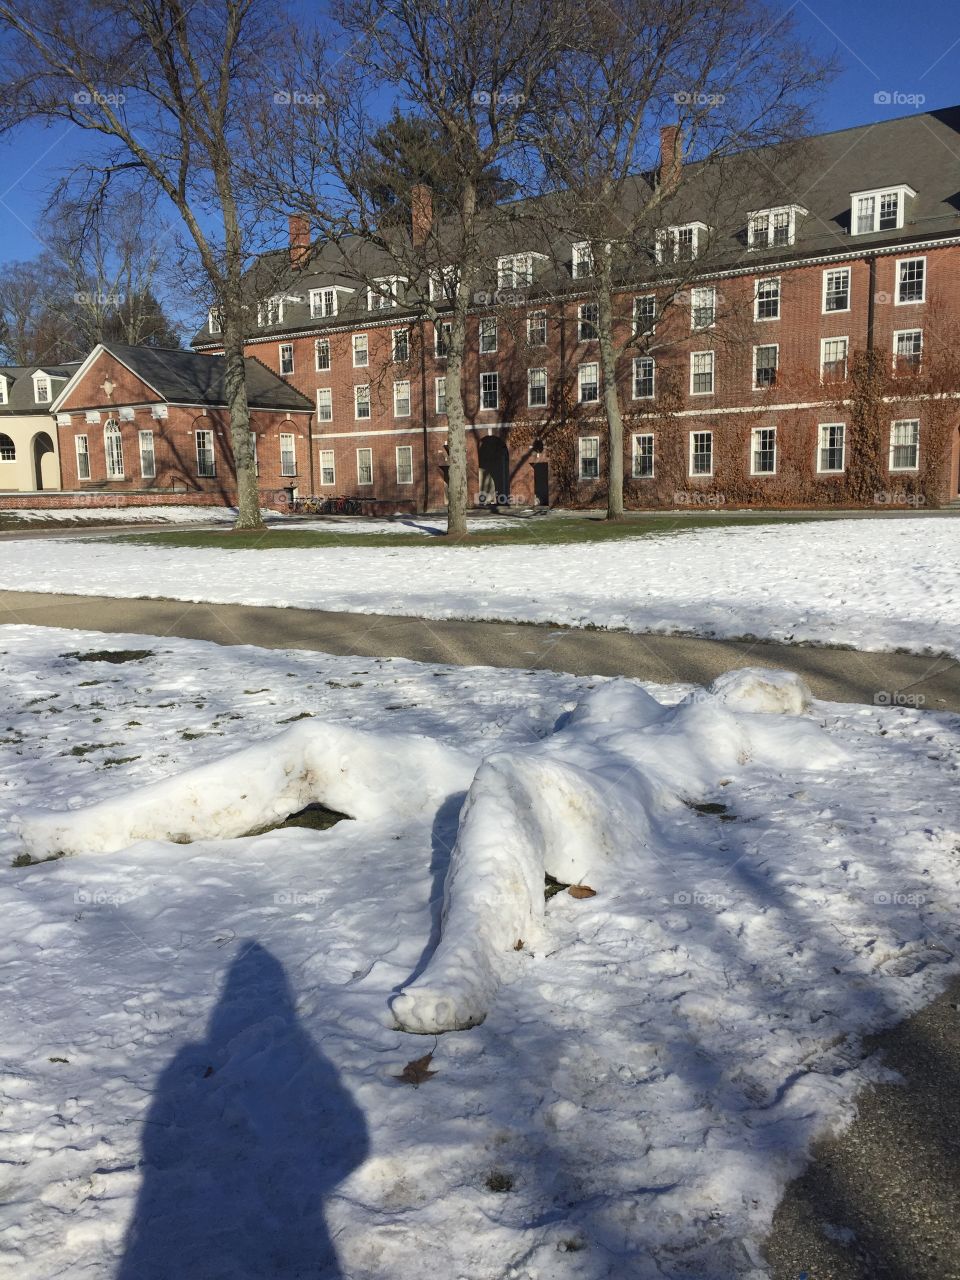 Snow sculpture on school quad